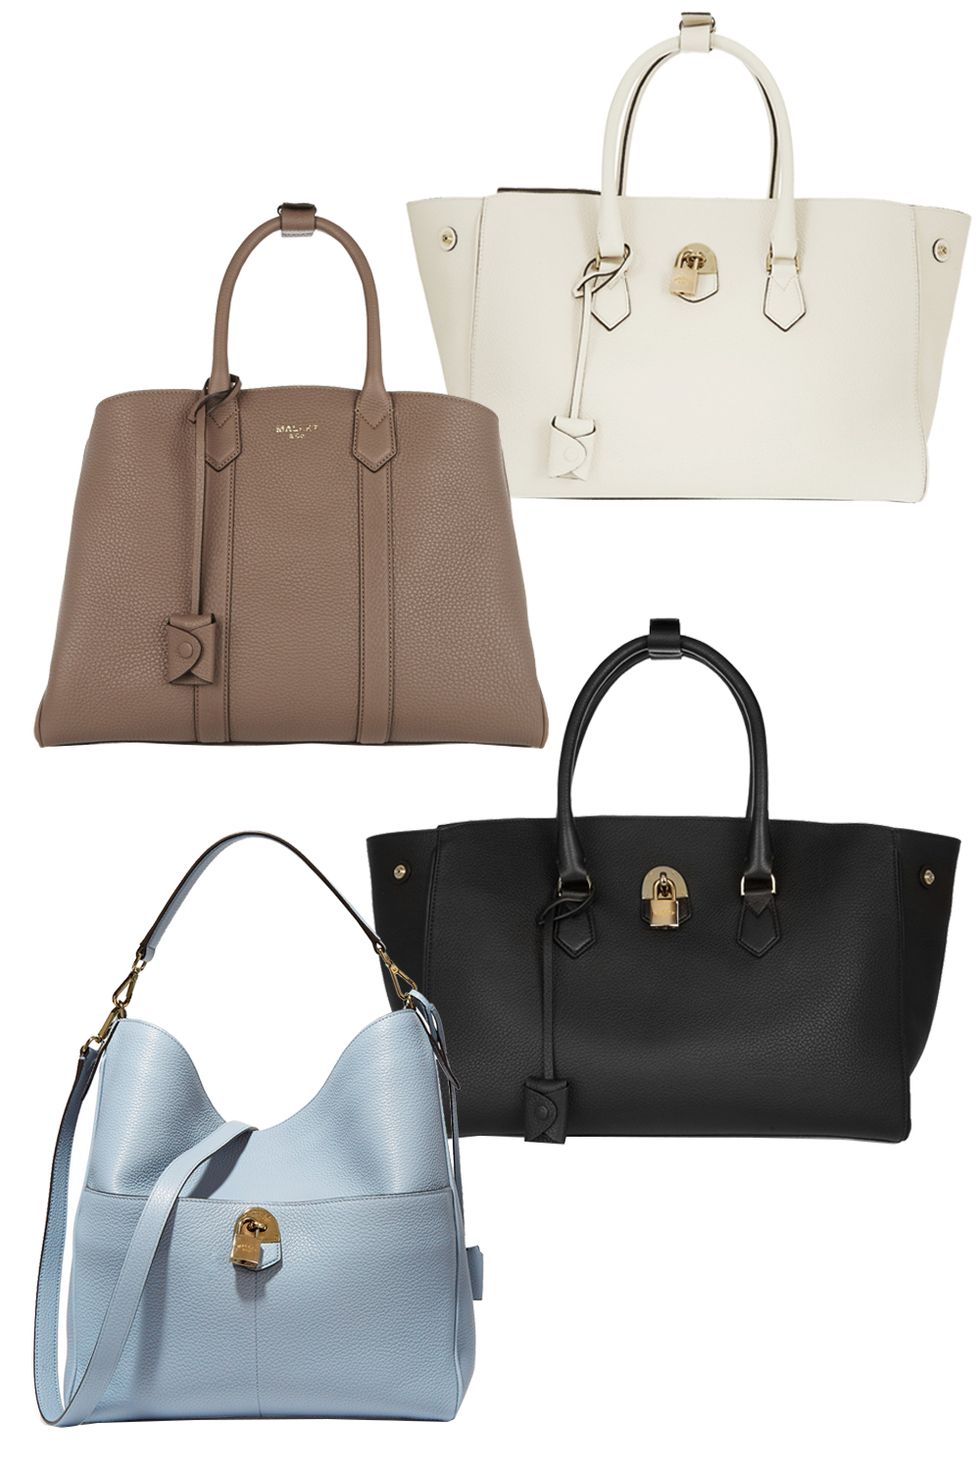 matching bag!  Handbag, Fashion bags, Bags